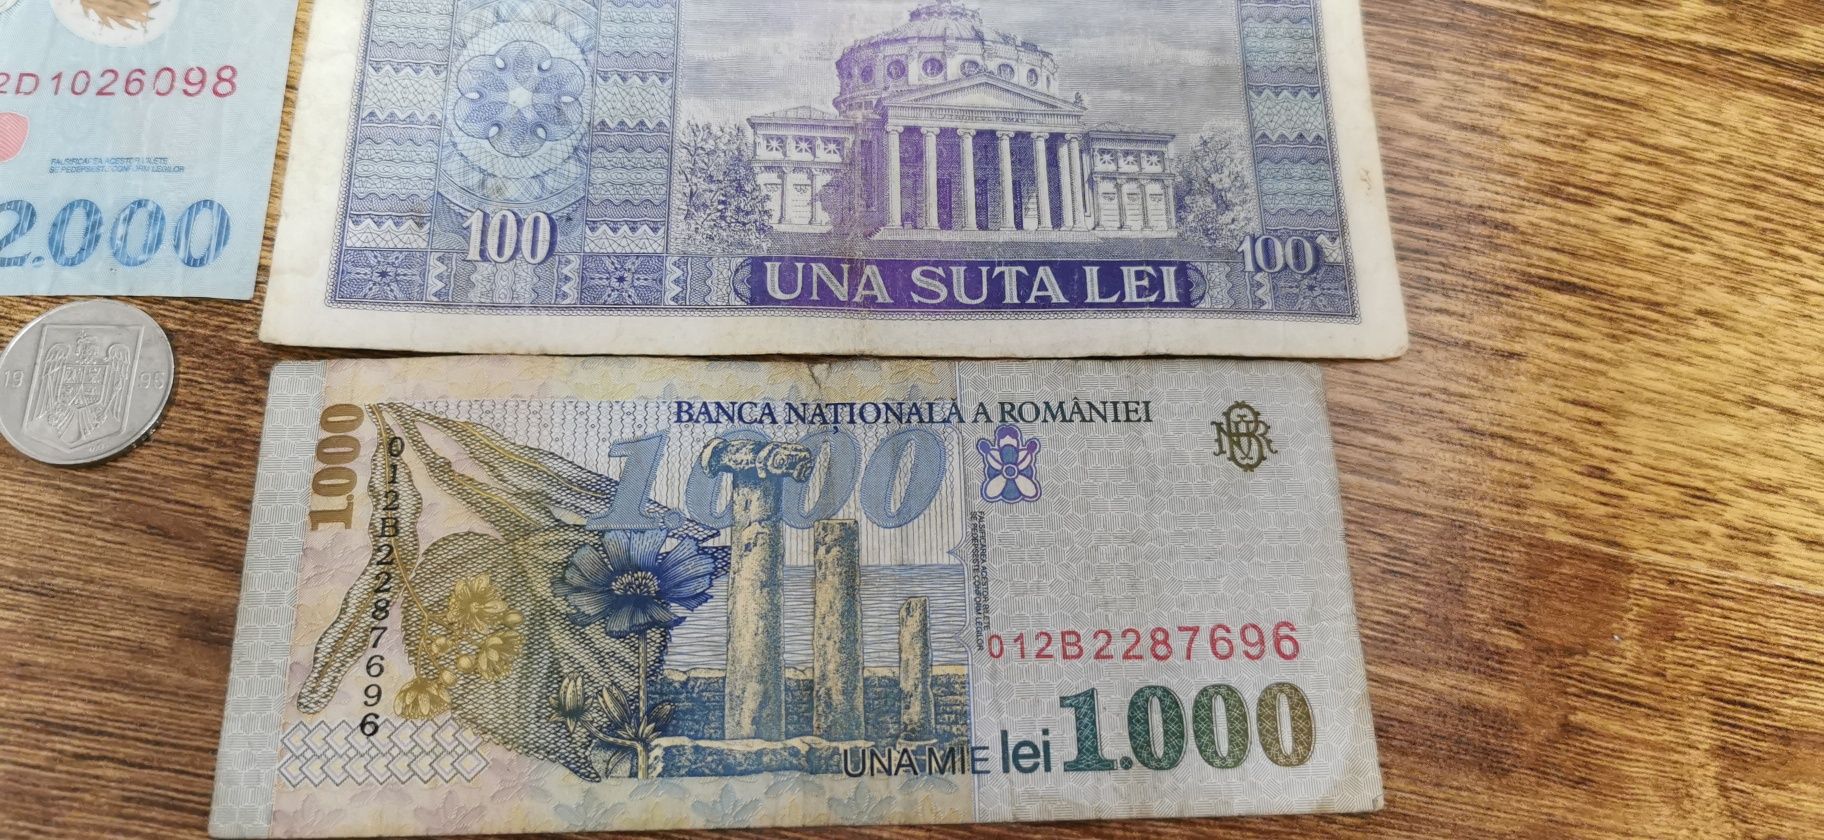 Vand bancnote/monezi romanesti colectie